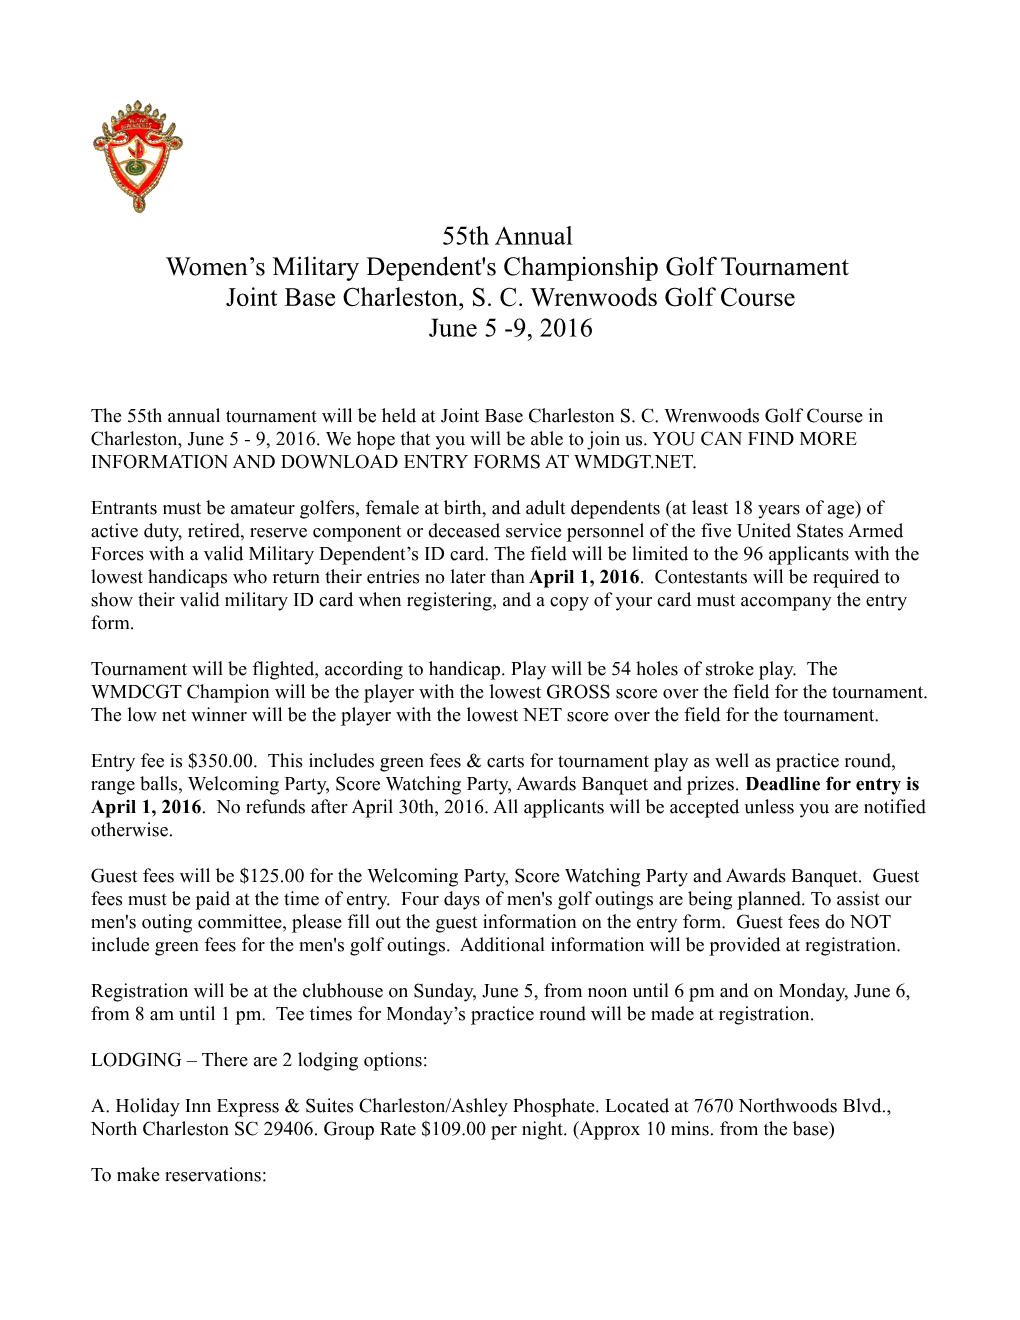 Women S Military Dependent's Championship Golf Tournament